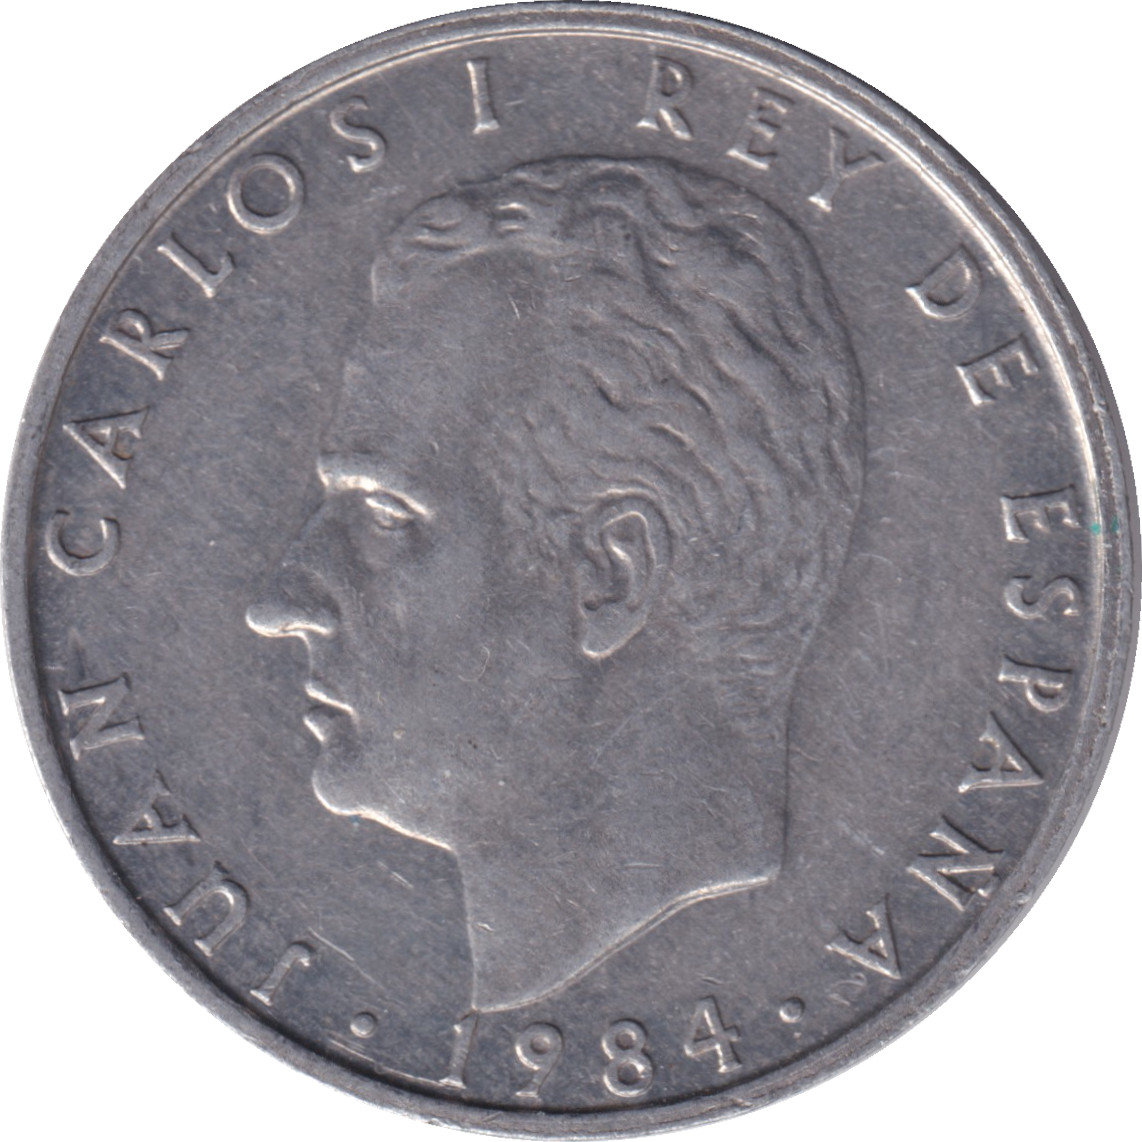 2 pesetas - Juan Carlos I